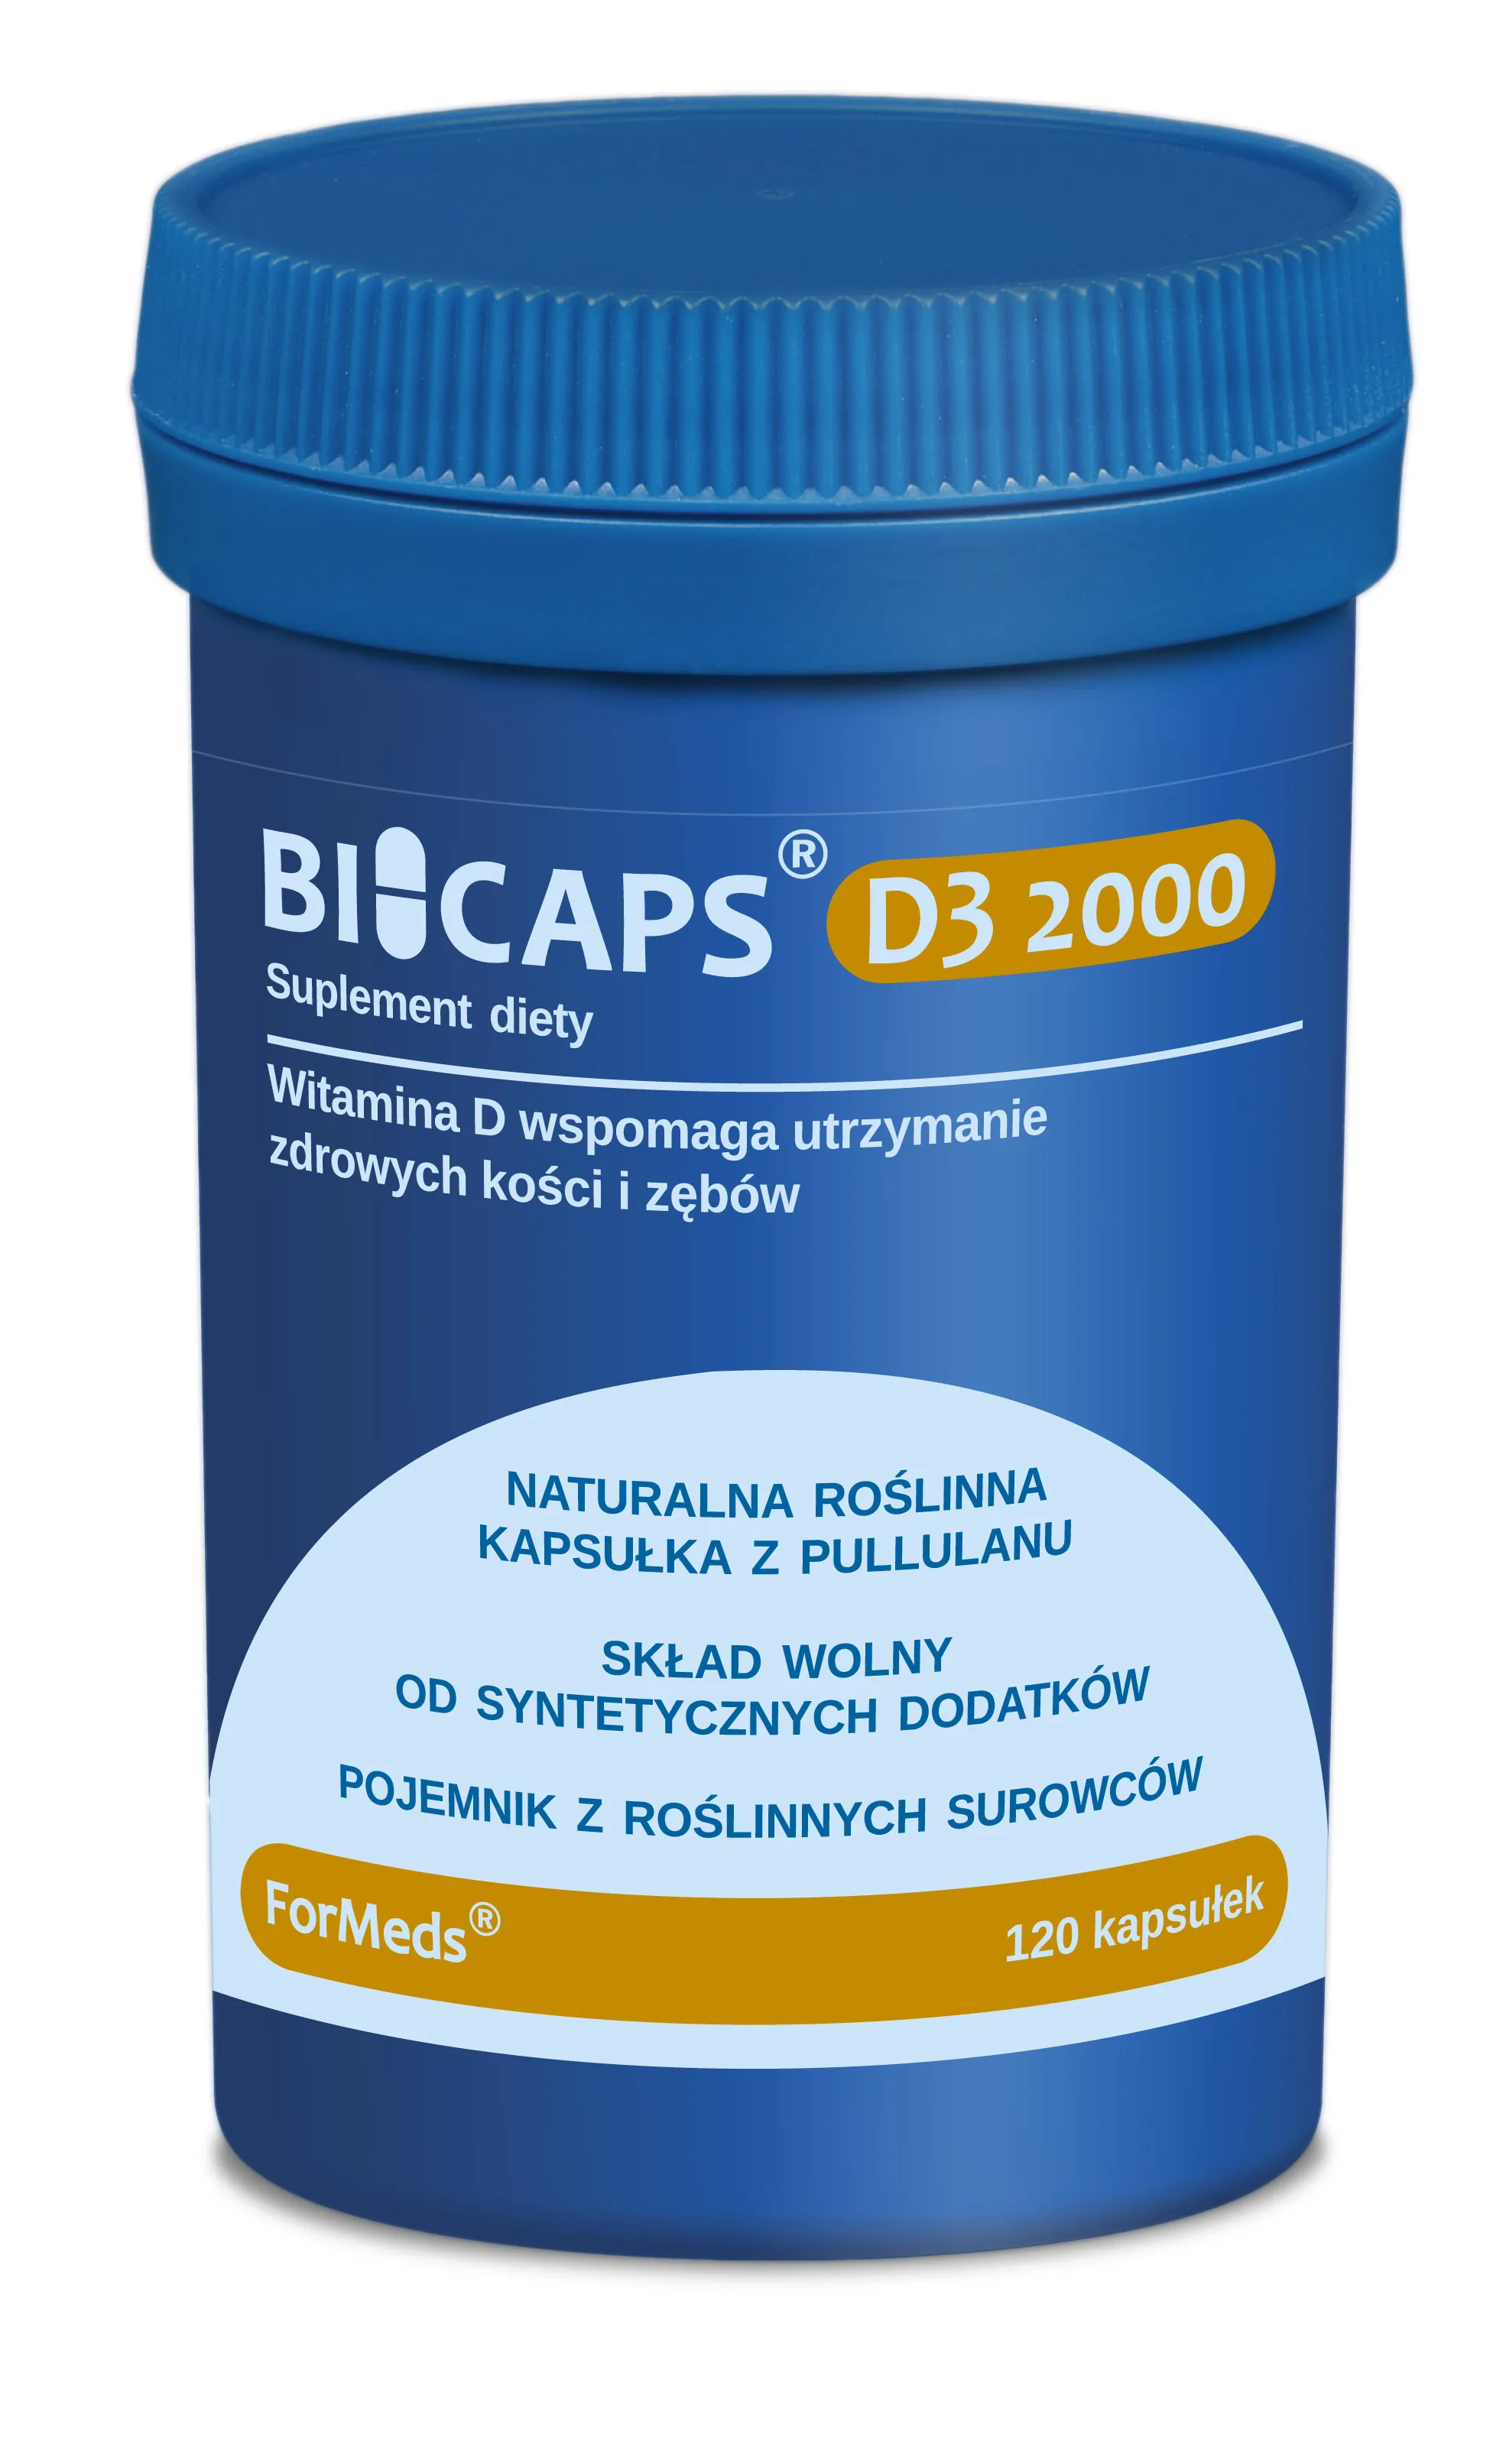 ForMeds Bicaps D3 2000, suplement diety, 120 kapsułek